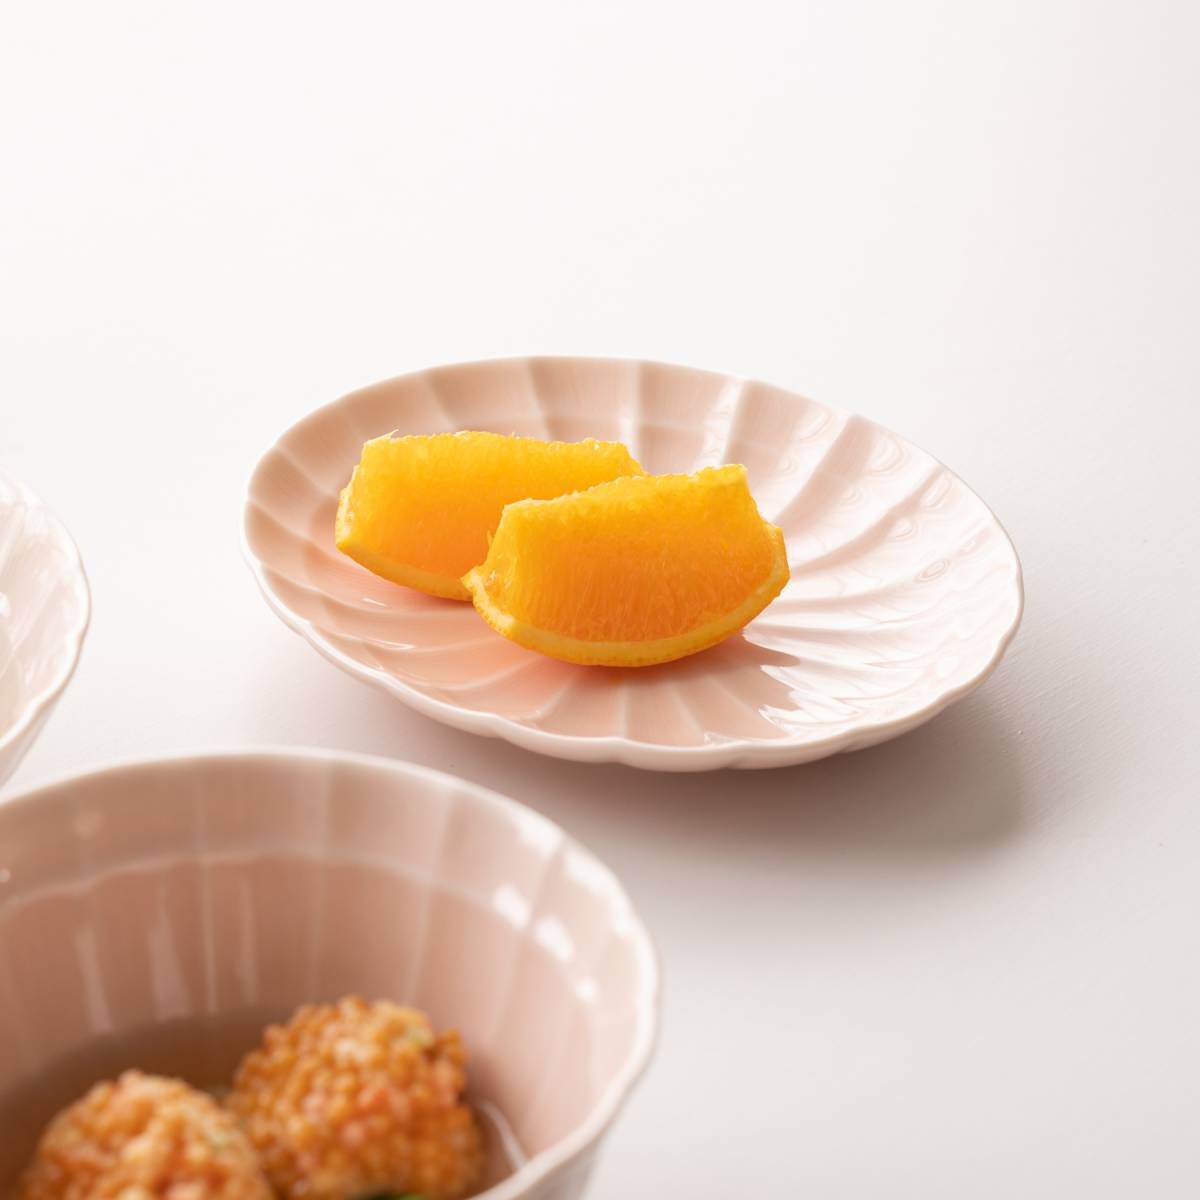 Miyama Suzune Minoyaki Tableware Bowls & Plates - Peach [Limited]